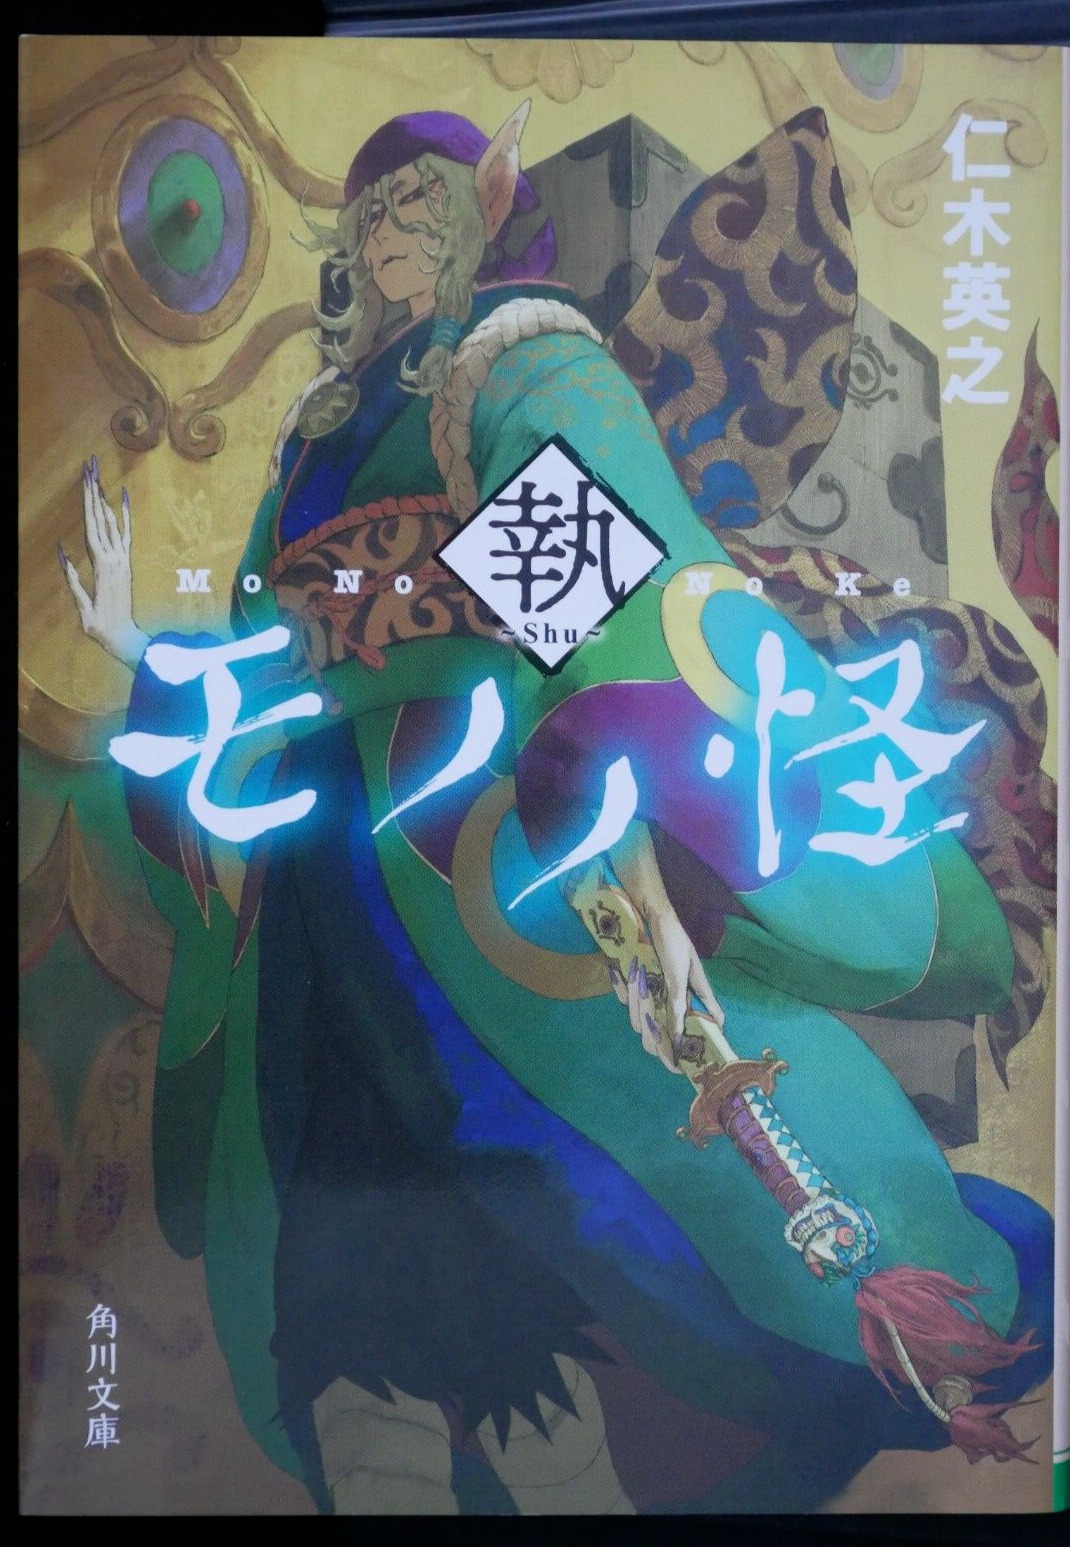 Mononoke Shu Novel by Hideyuki Niki (Written in Japanese) from JAPAN